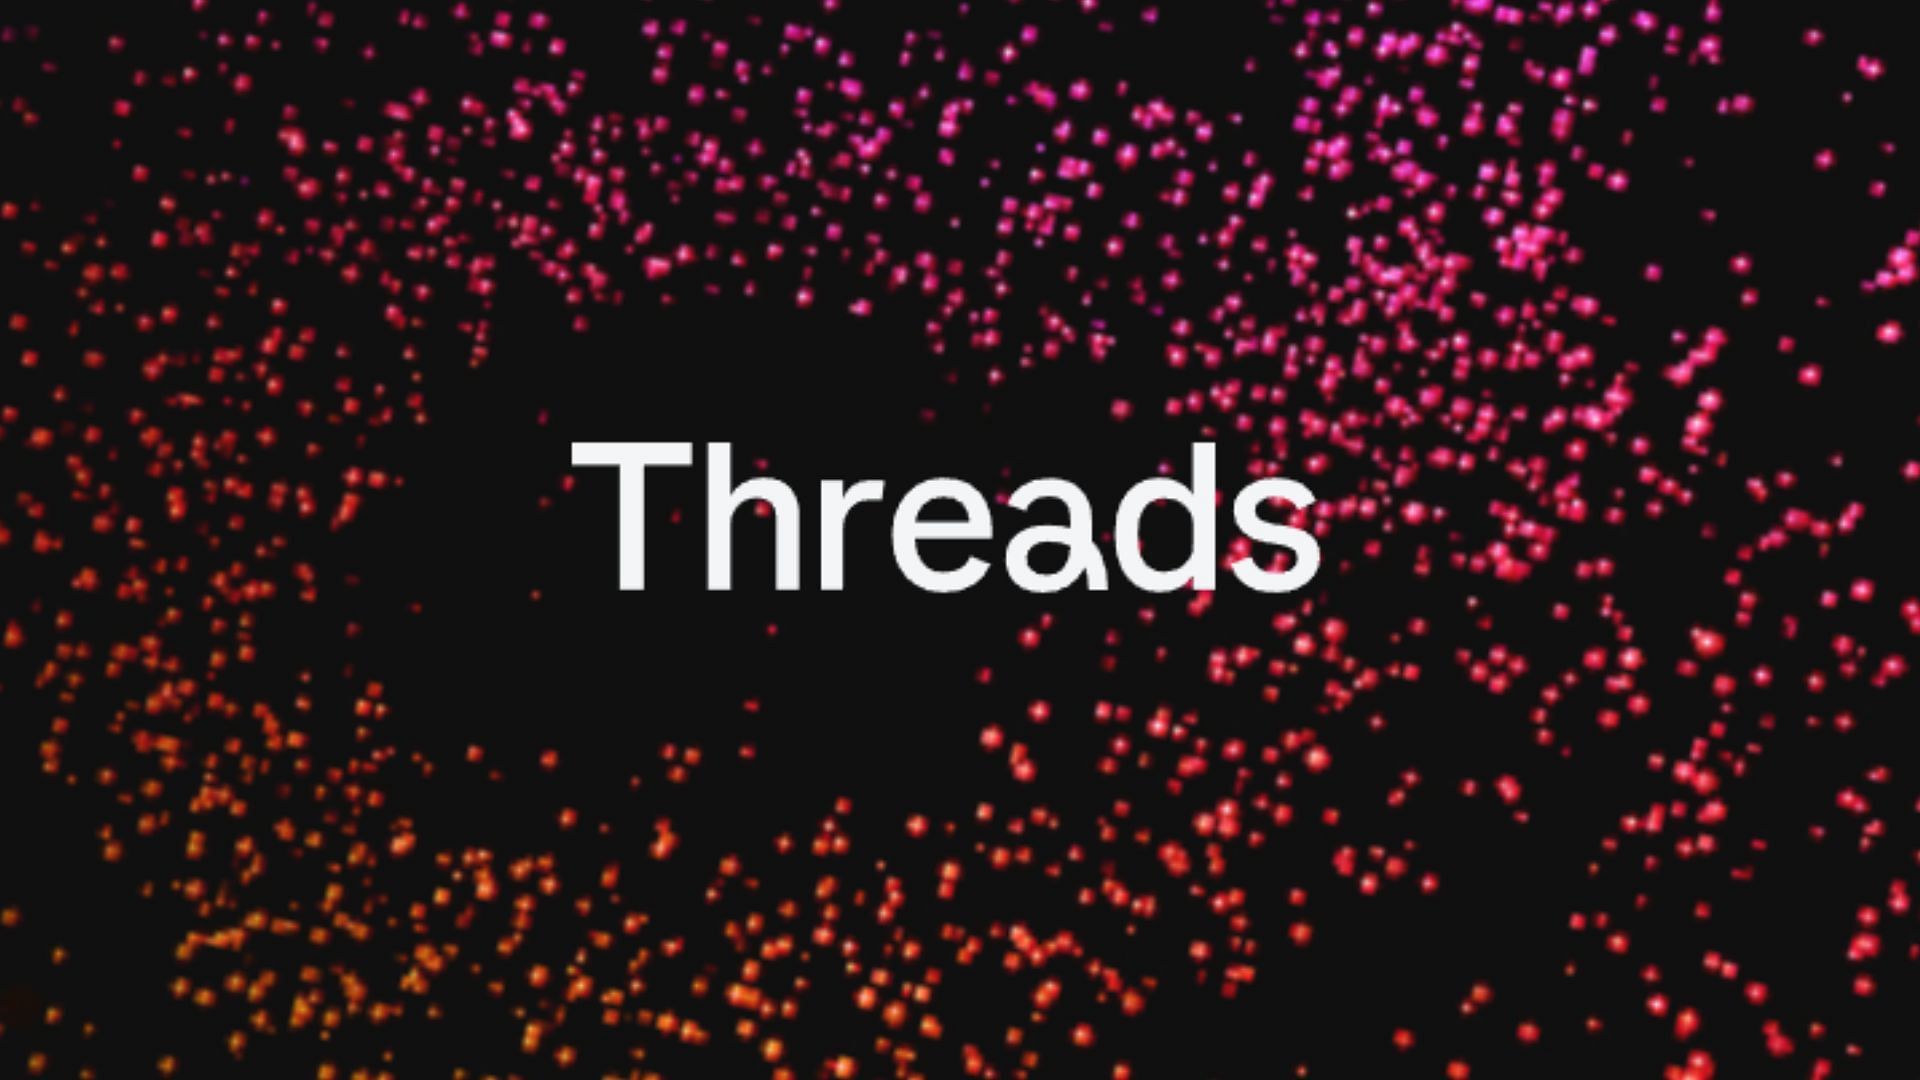 Does Threads have a desktop version?